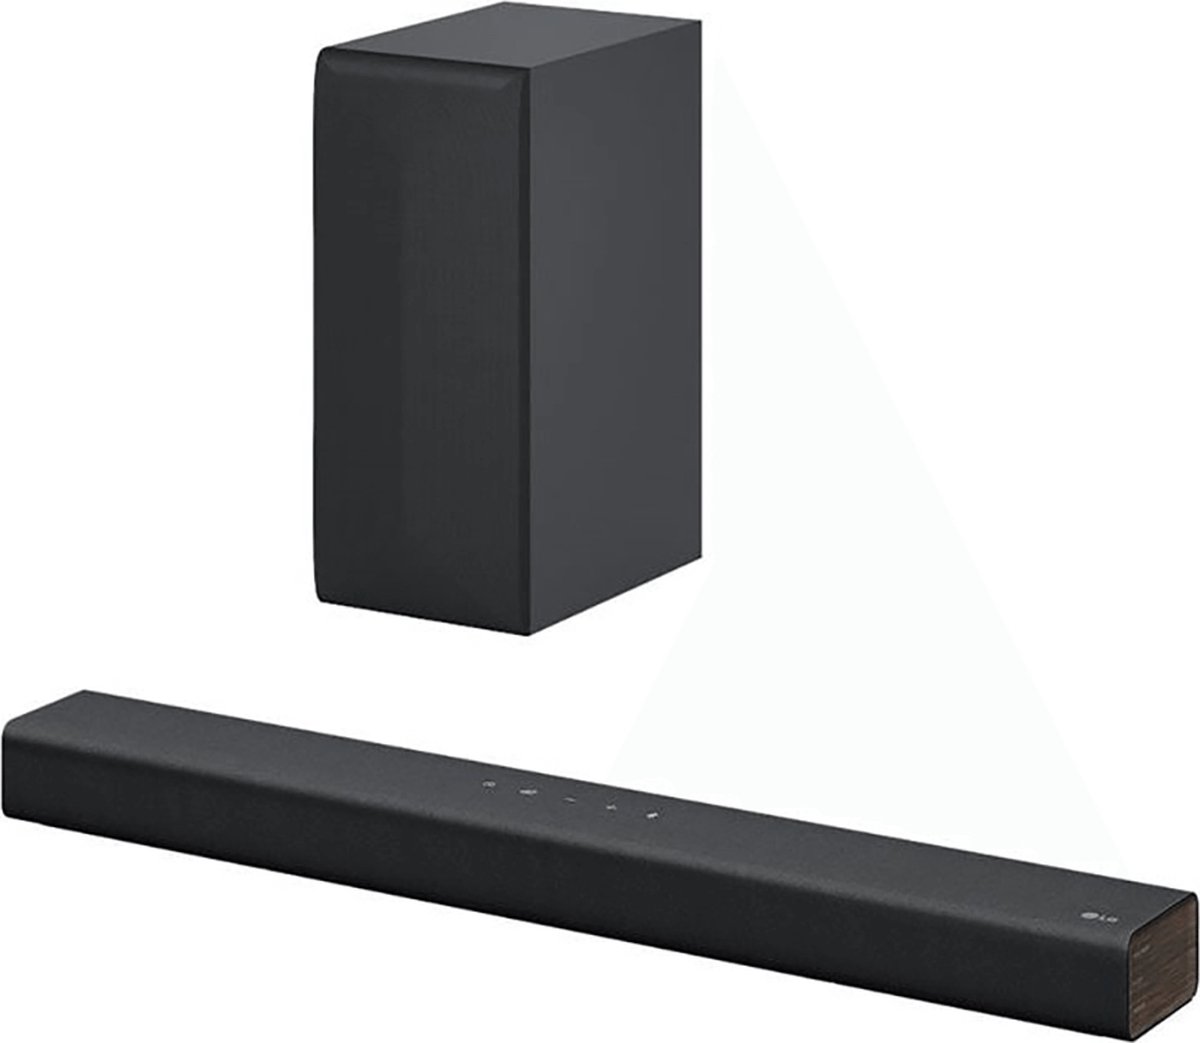 LG - Soundbar - DS40Q - 300W - draadloos - zwart